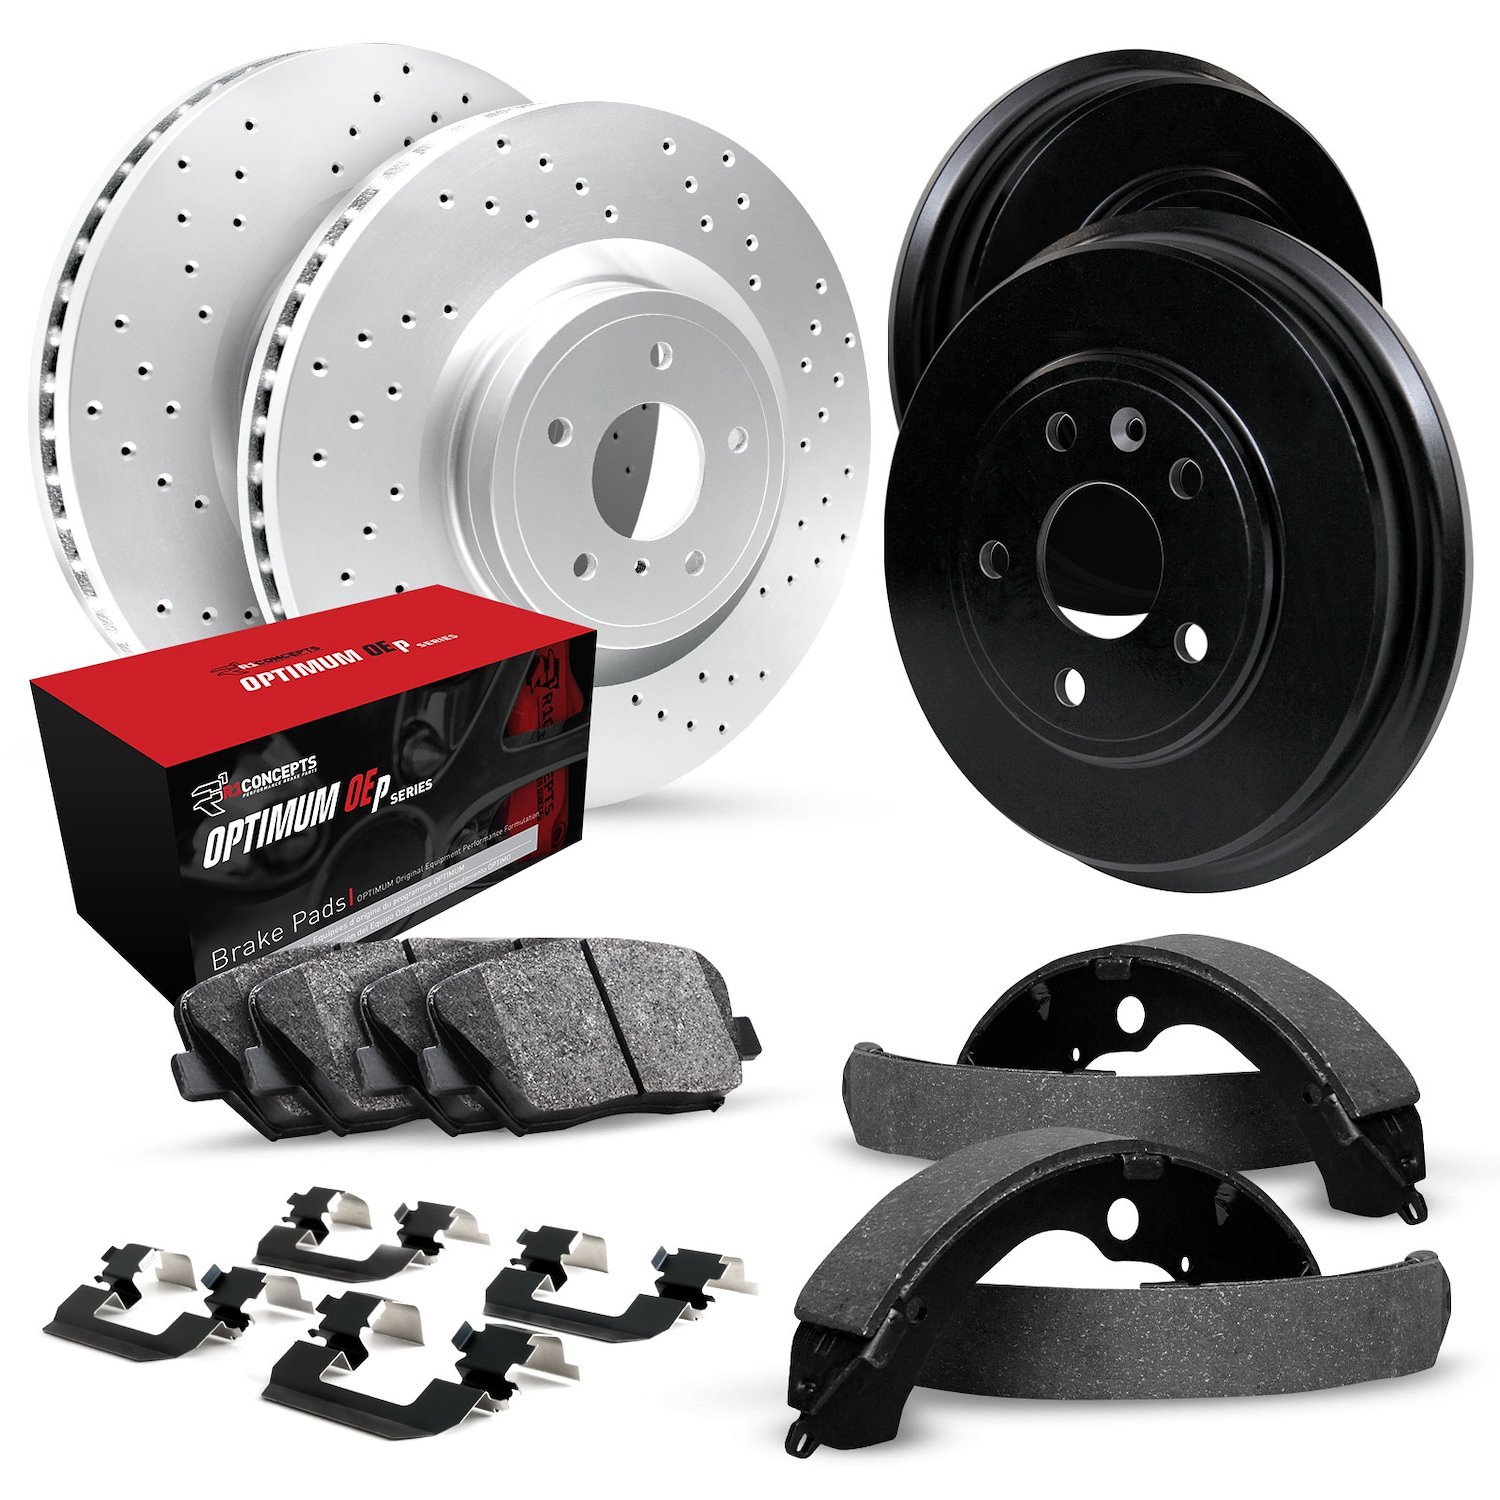 GEO-Carbon Drilled Brake Rotor & Drum Set w/Optimum OE Pads, Shoes, & Hardware, 2013-2019 Infiniti/Nissan